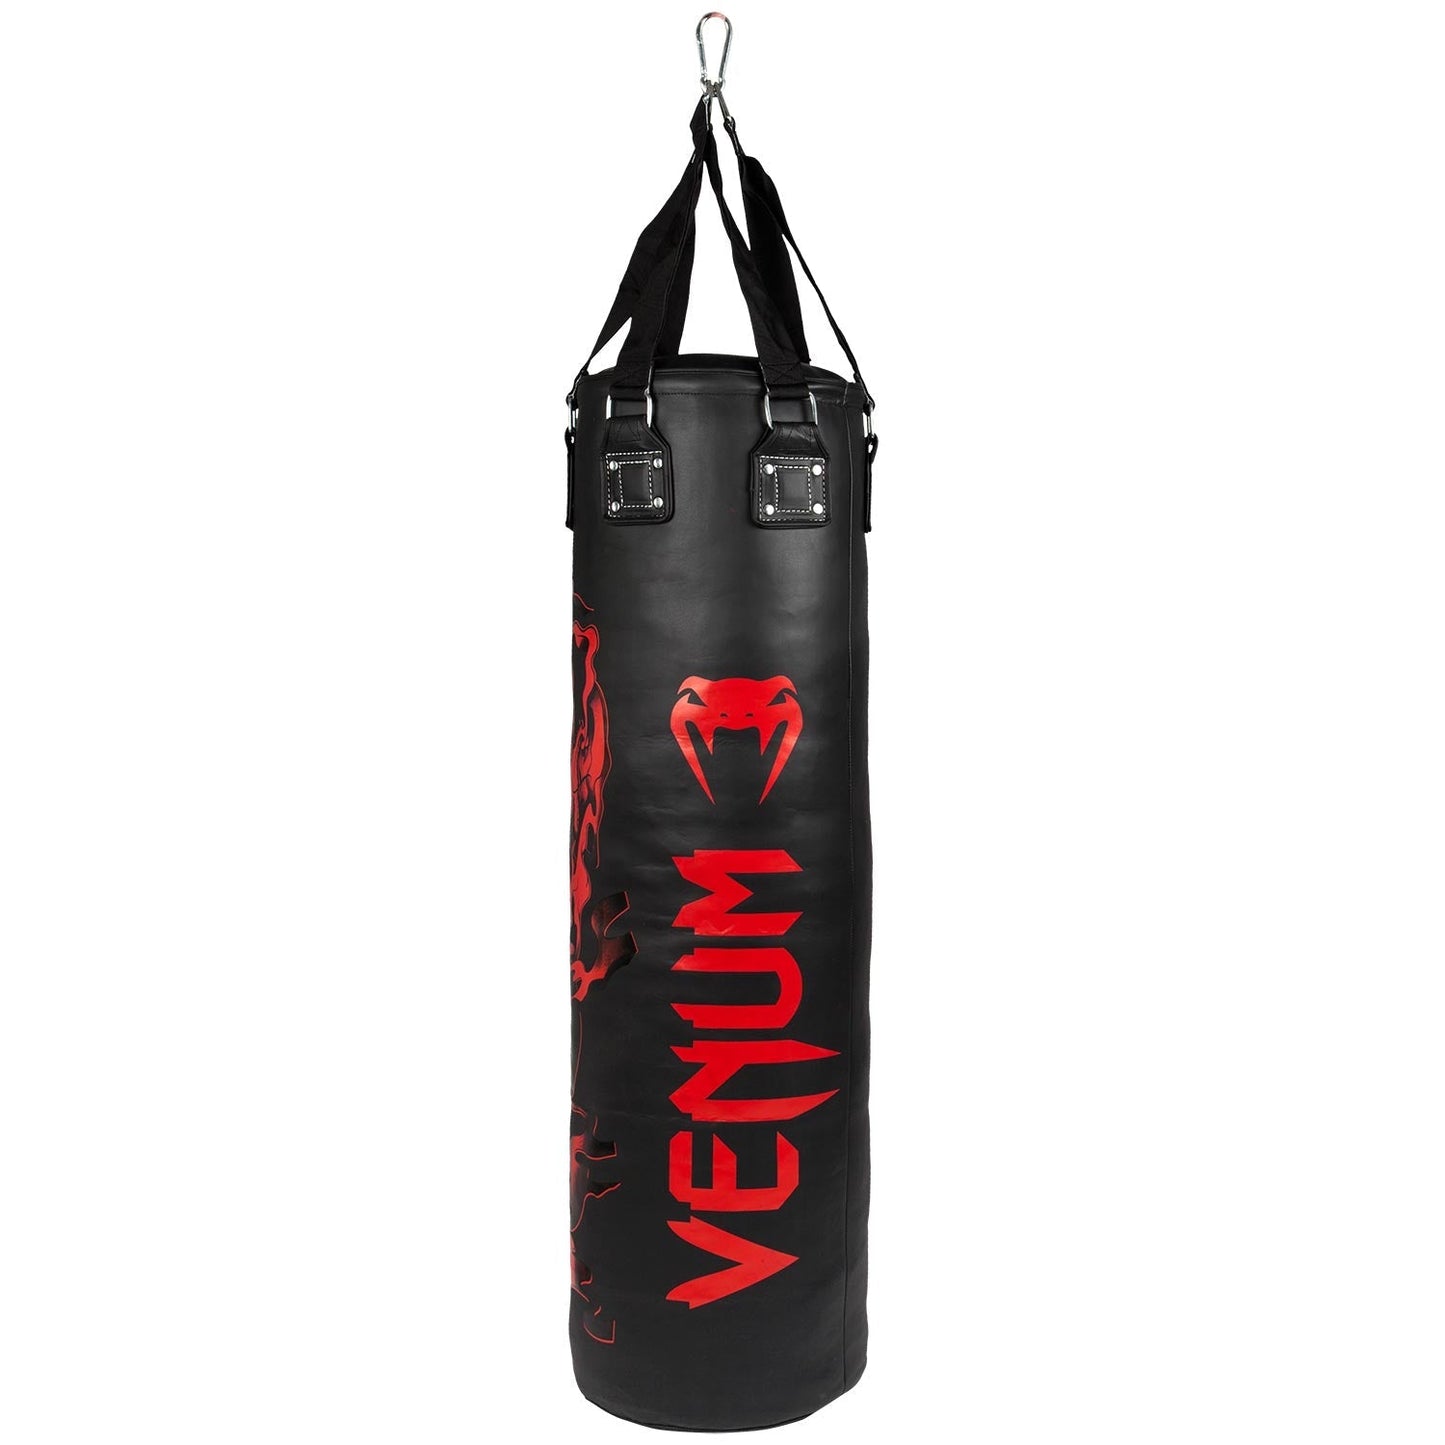 Venum Dragon's Flight Heavy Bag - Black/Red - 170 cm